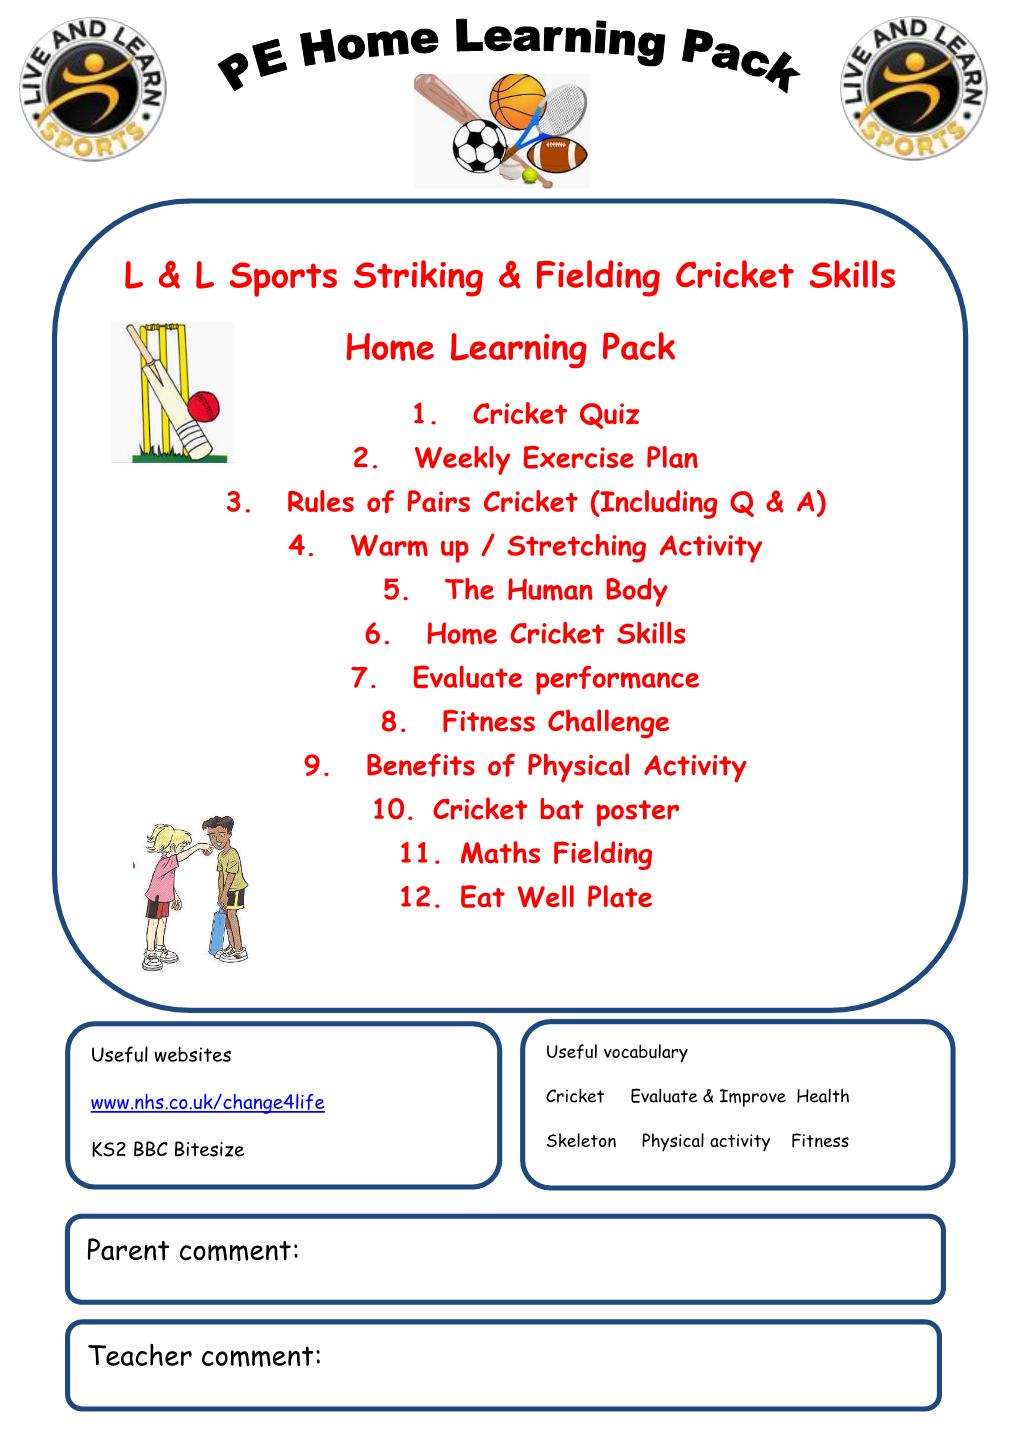 L & L Sports Striking & Fielding Cricket Skills Home Learning Pack